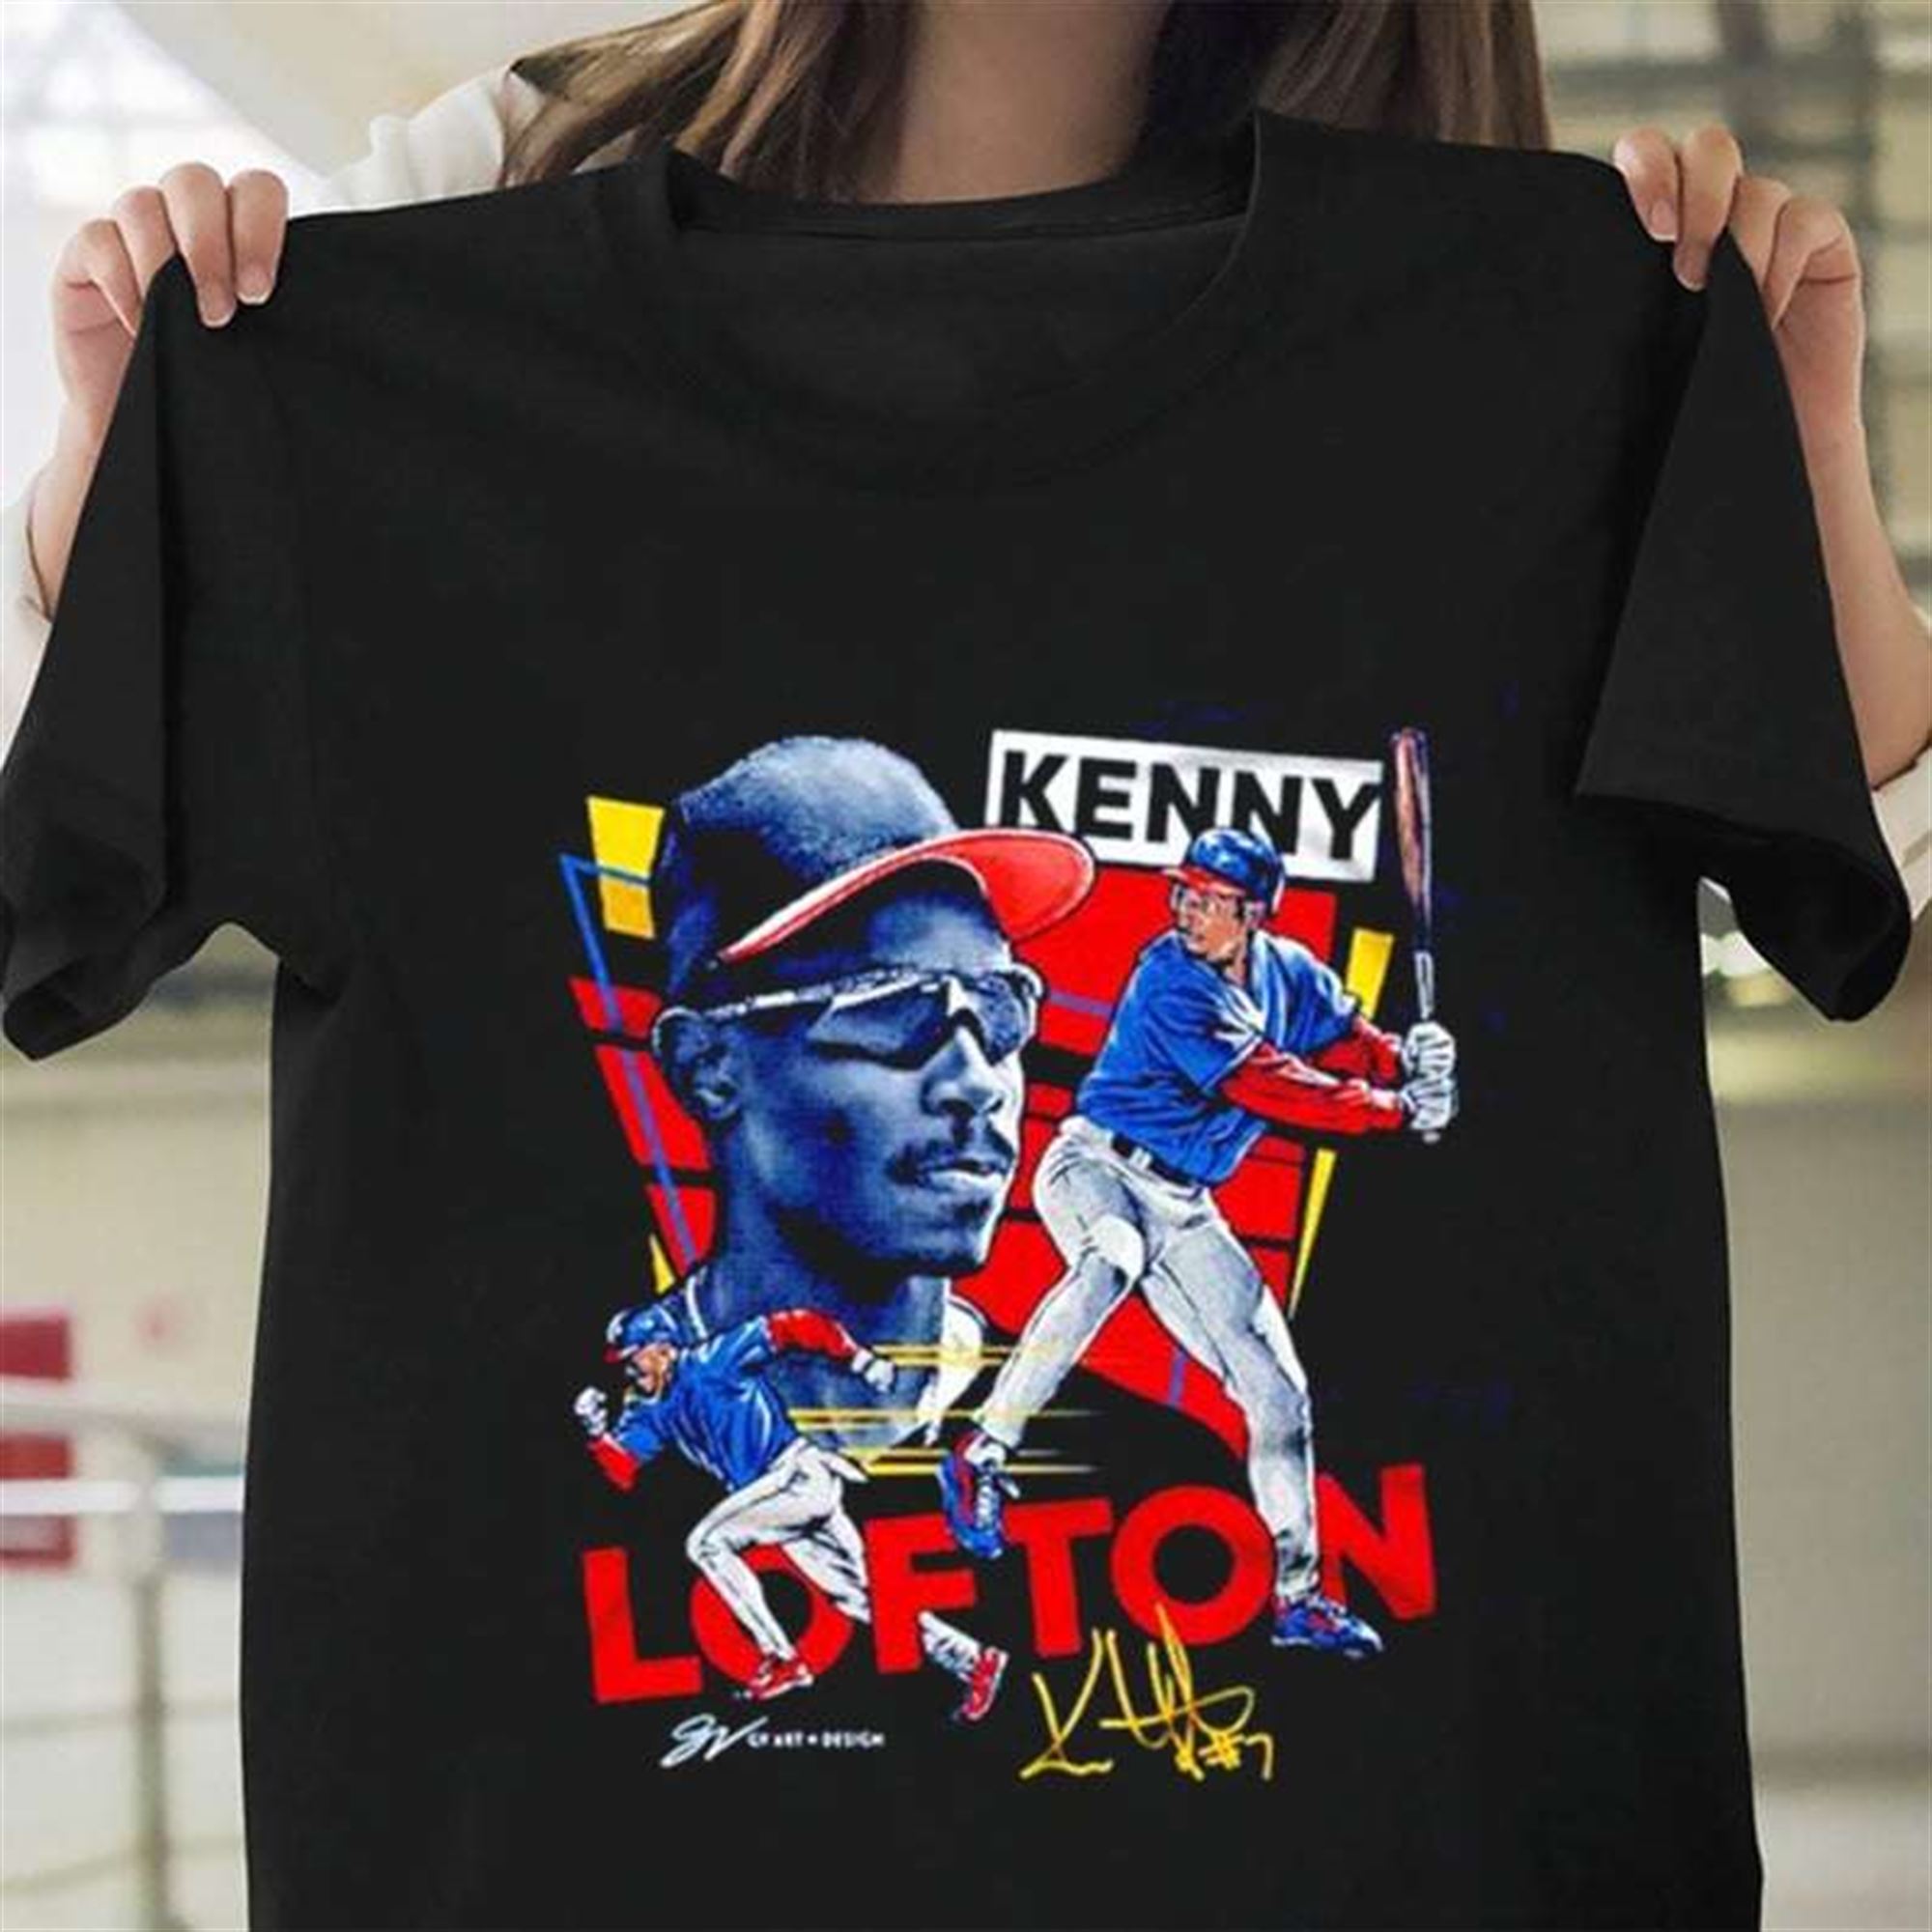 Kenny Lofton 2021 Cleveland Indians Baseball T-shirt Size Up To 5xl